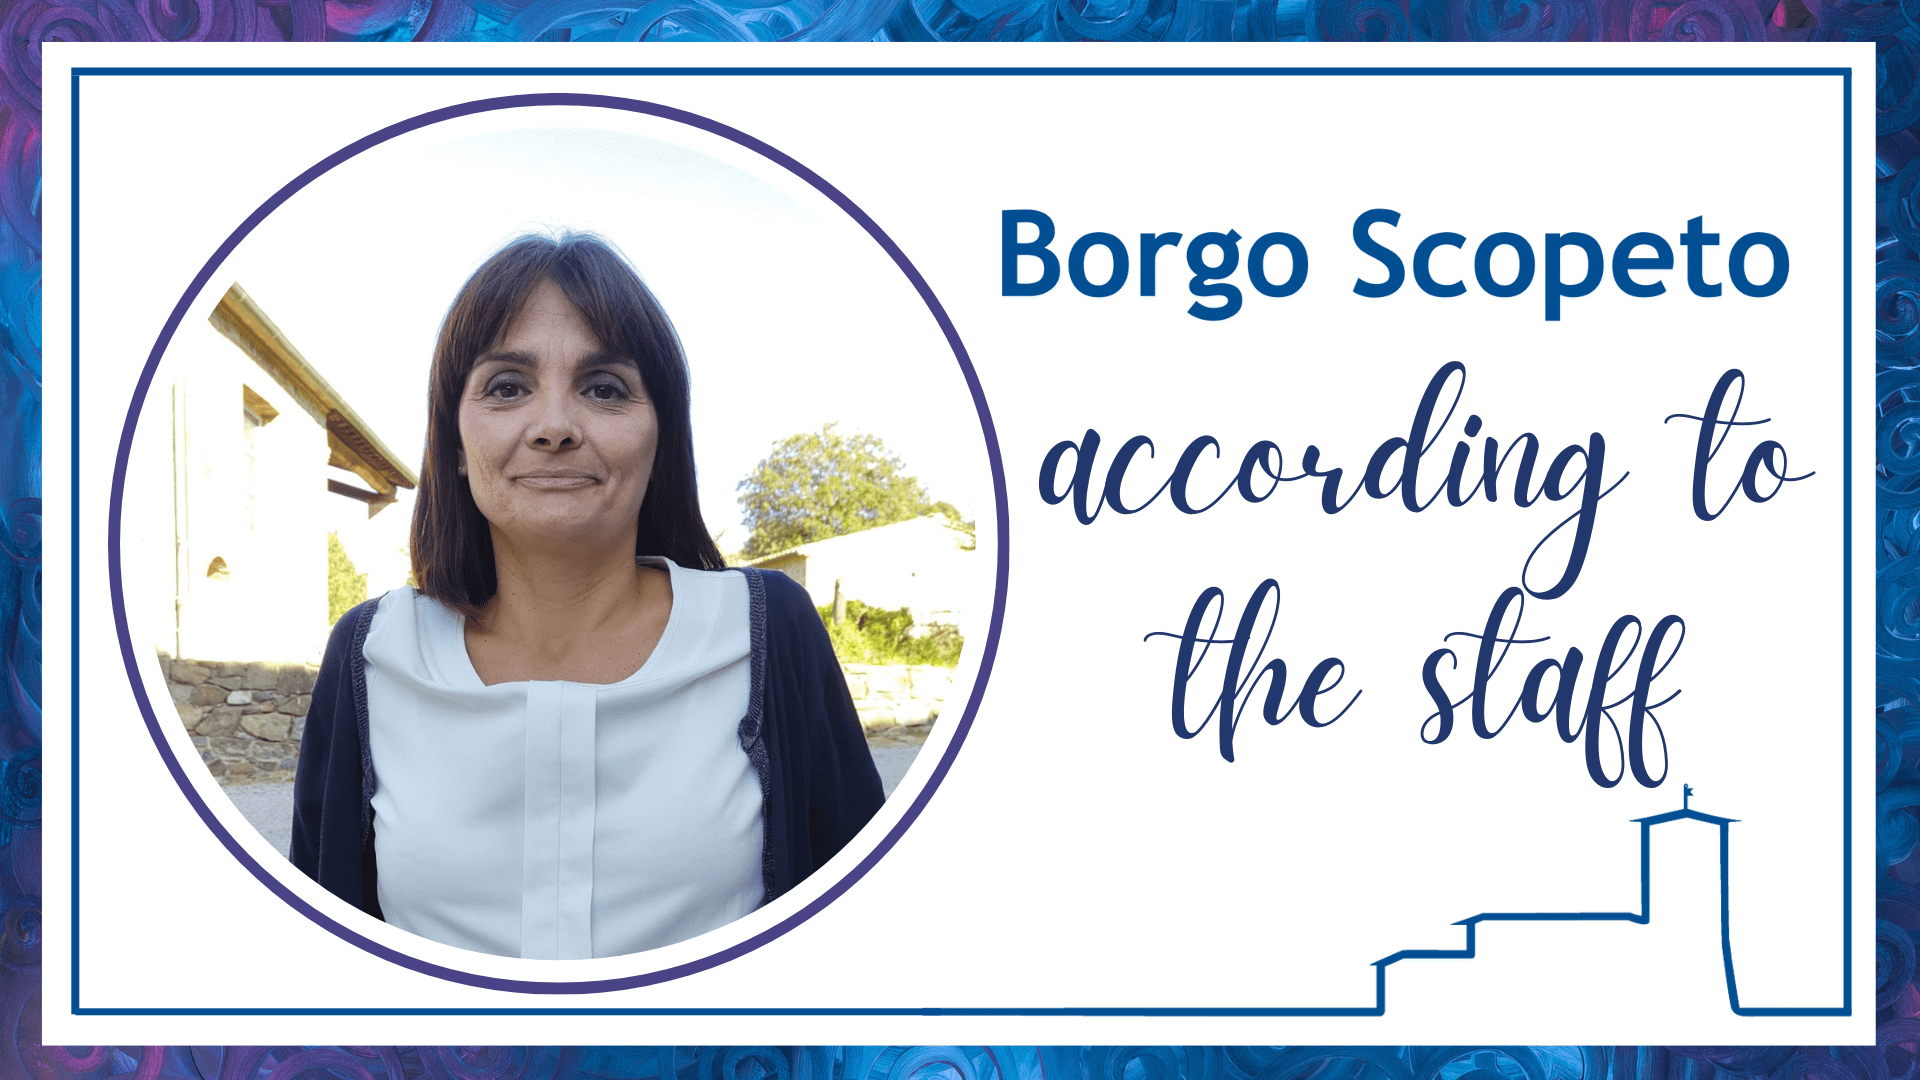 Borgo Scopeto according to the staff - Beatrice 2